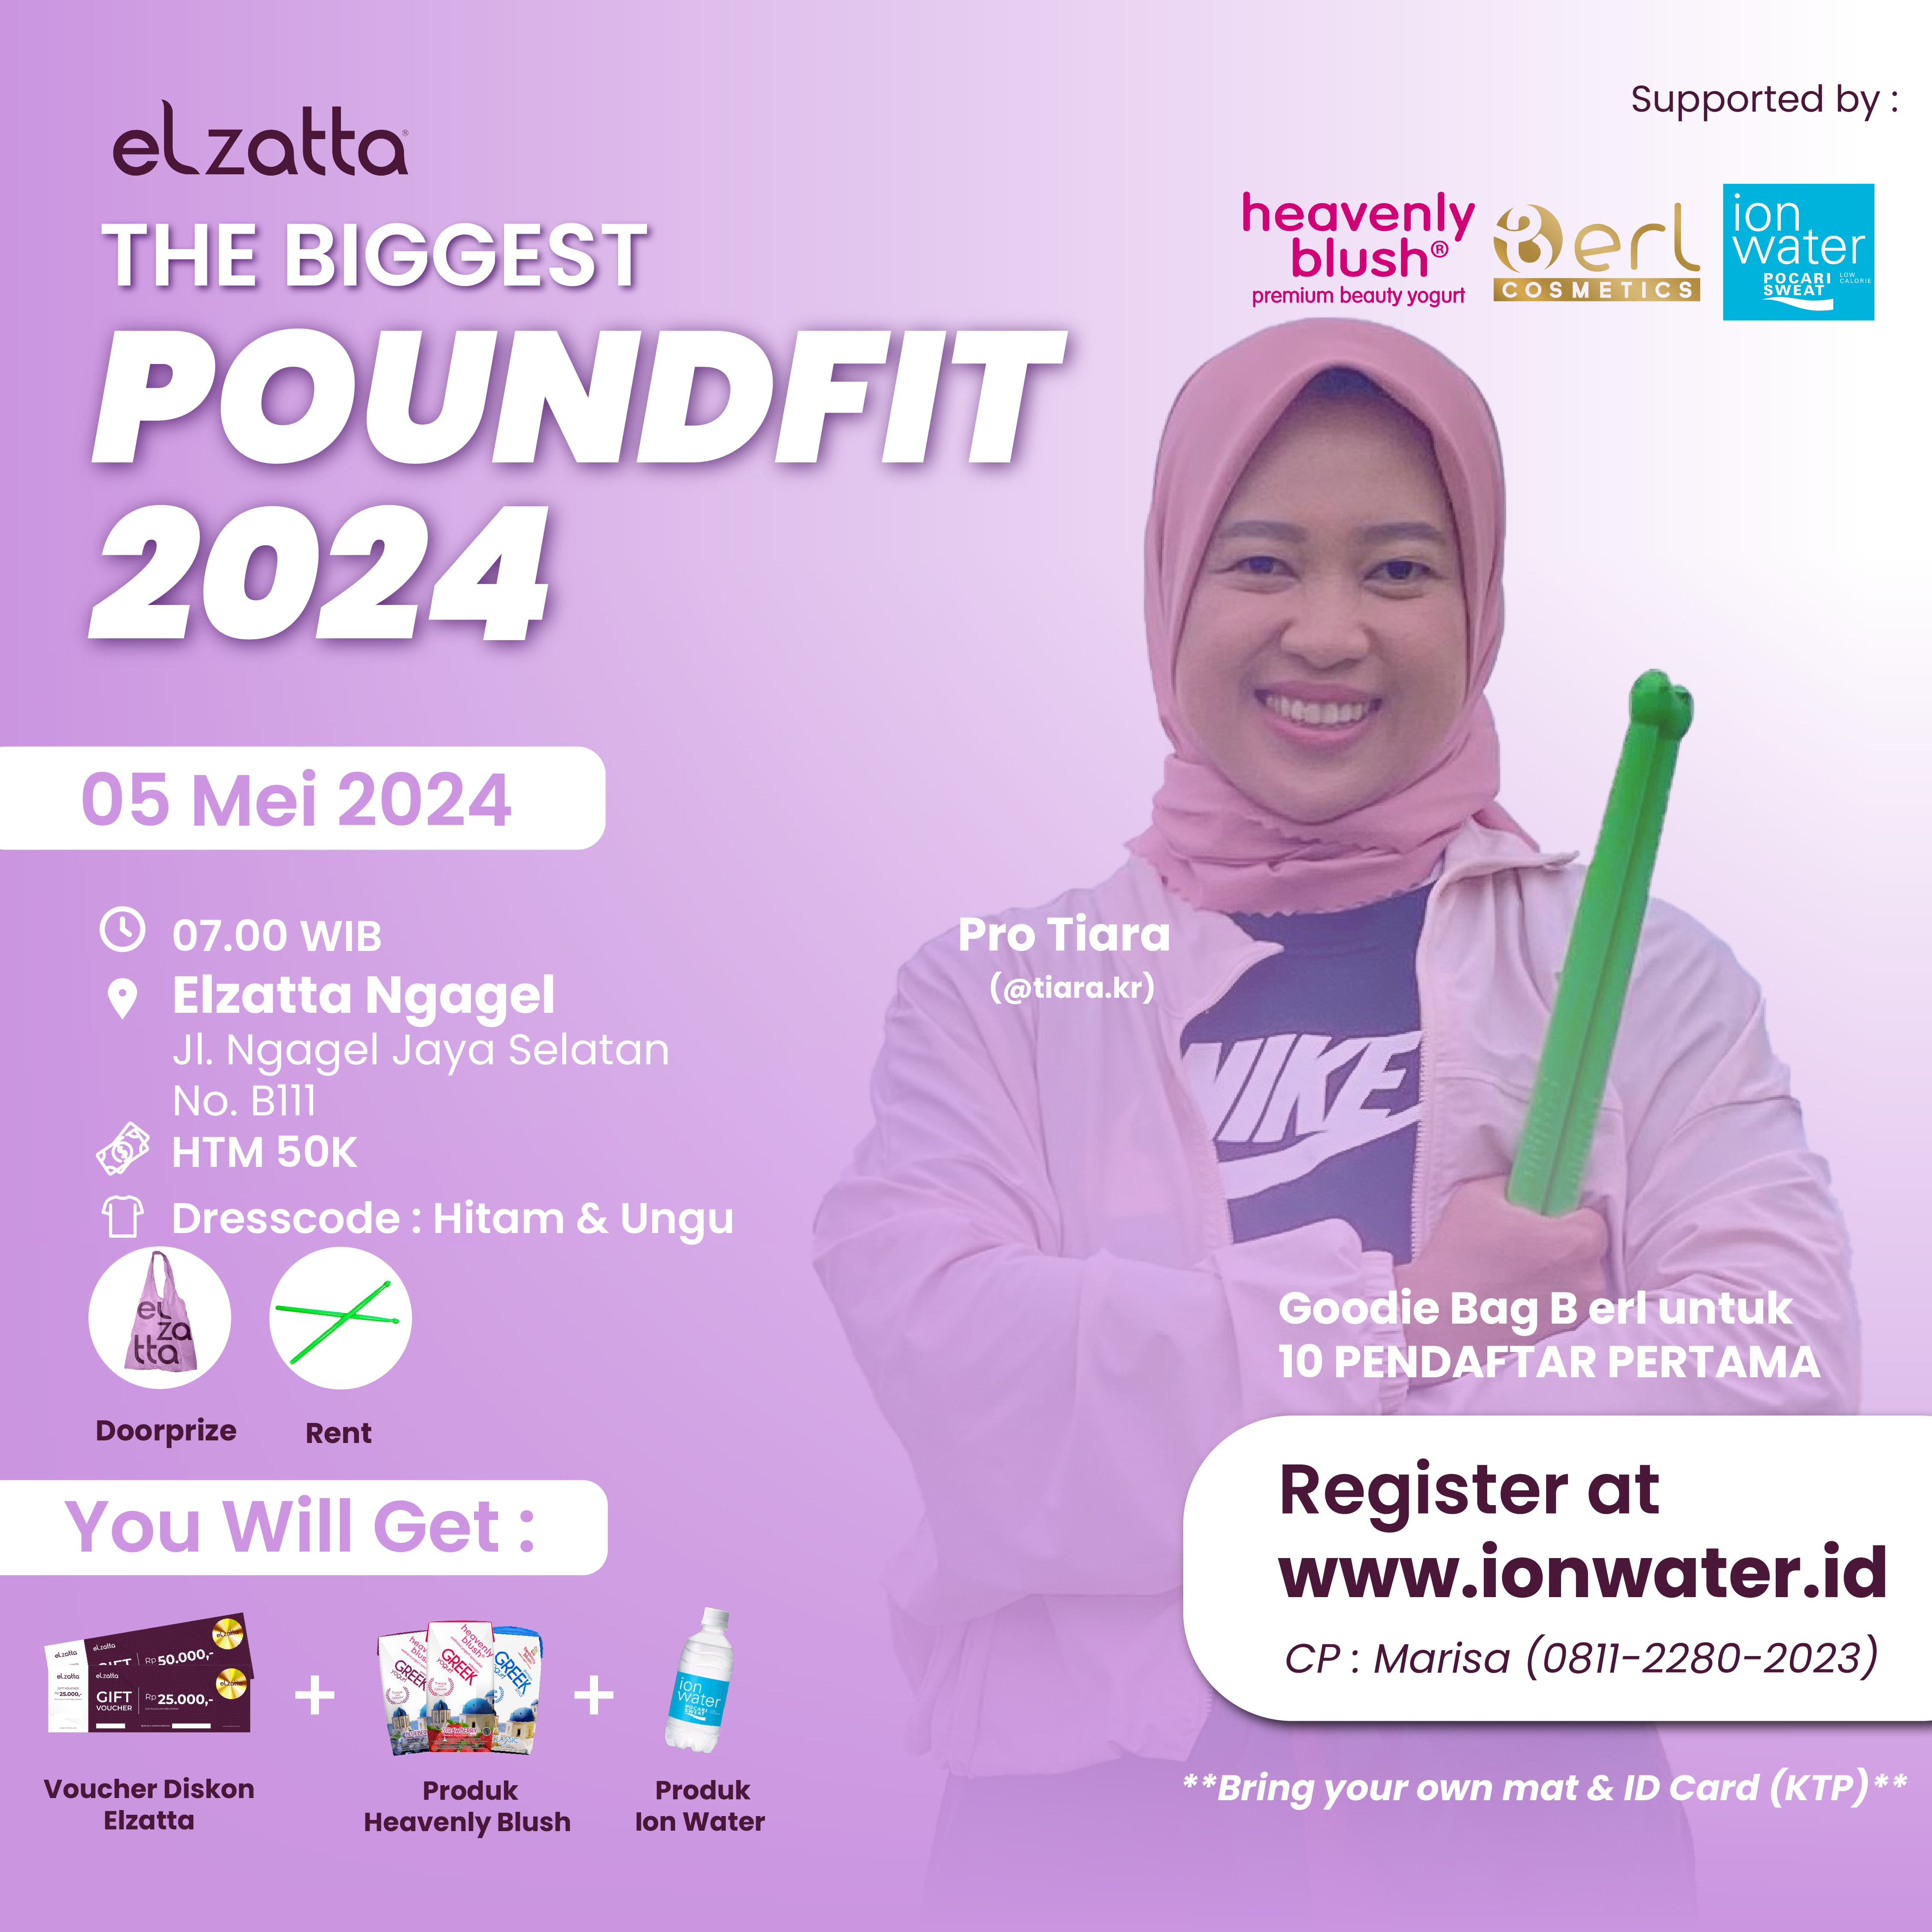 ELZATTA THE BIGGEST POUNDFIT 2024 - SURABAYA